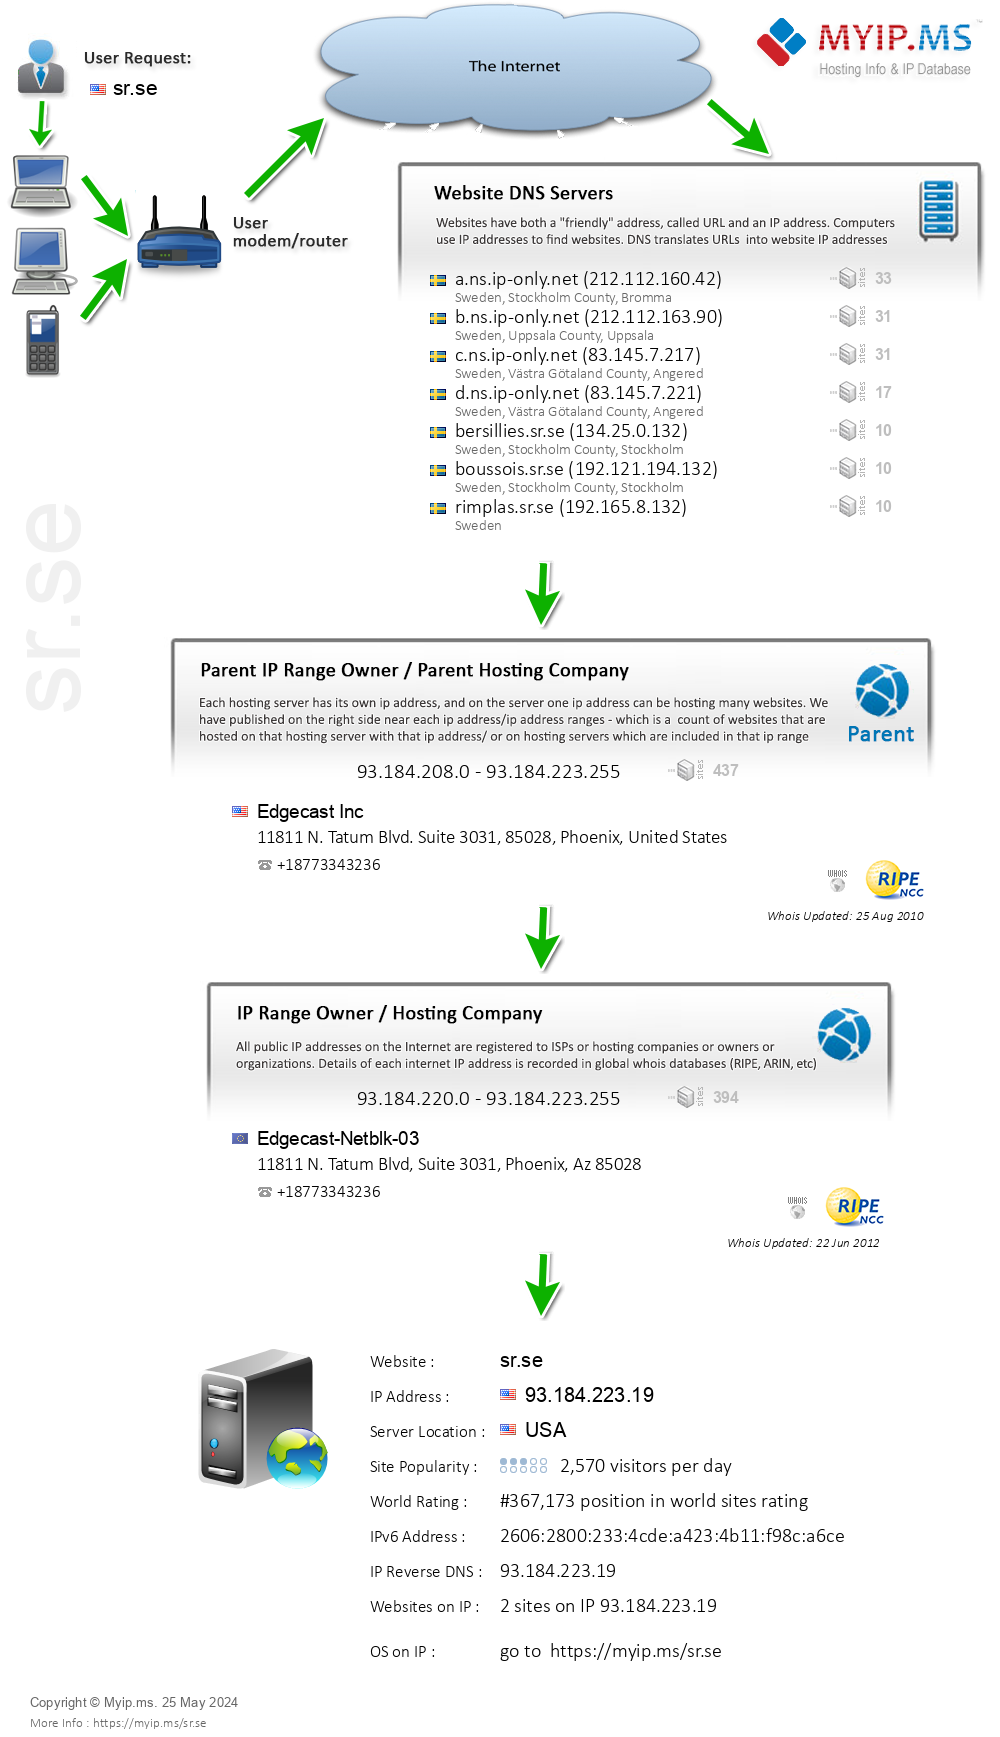 Sr.se - Website Hosting Visual IP Diagram